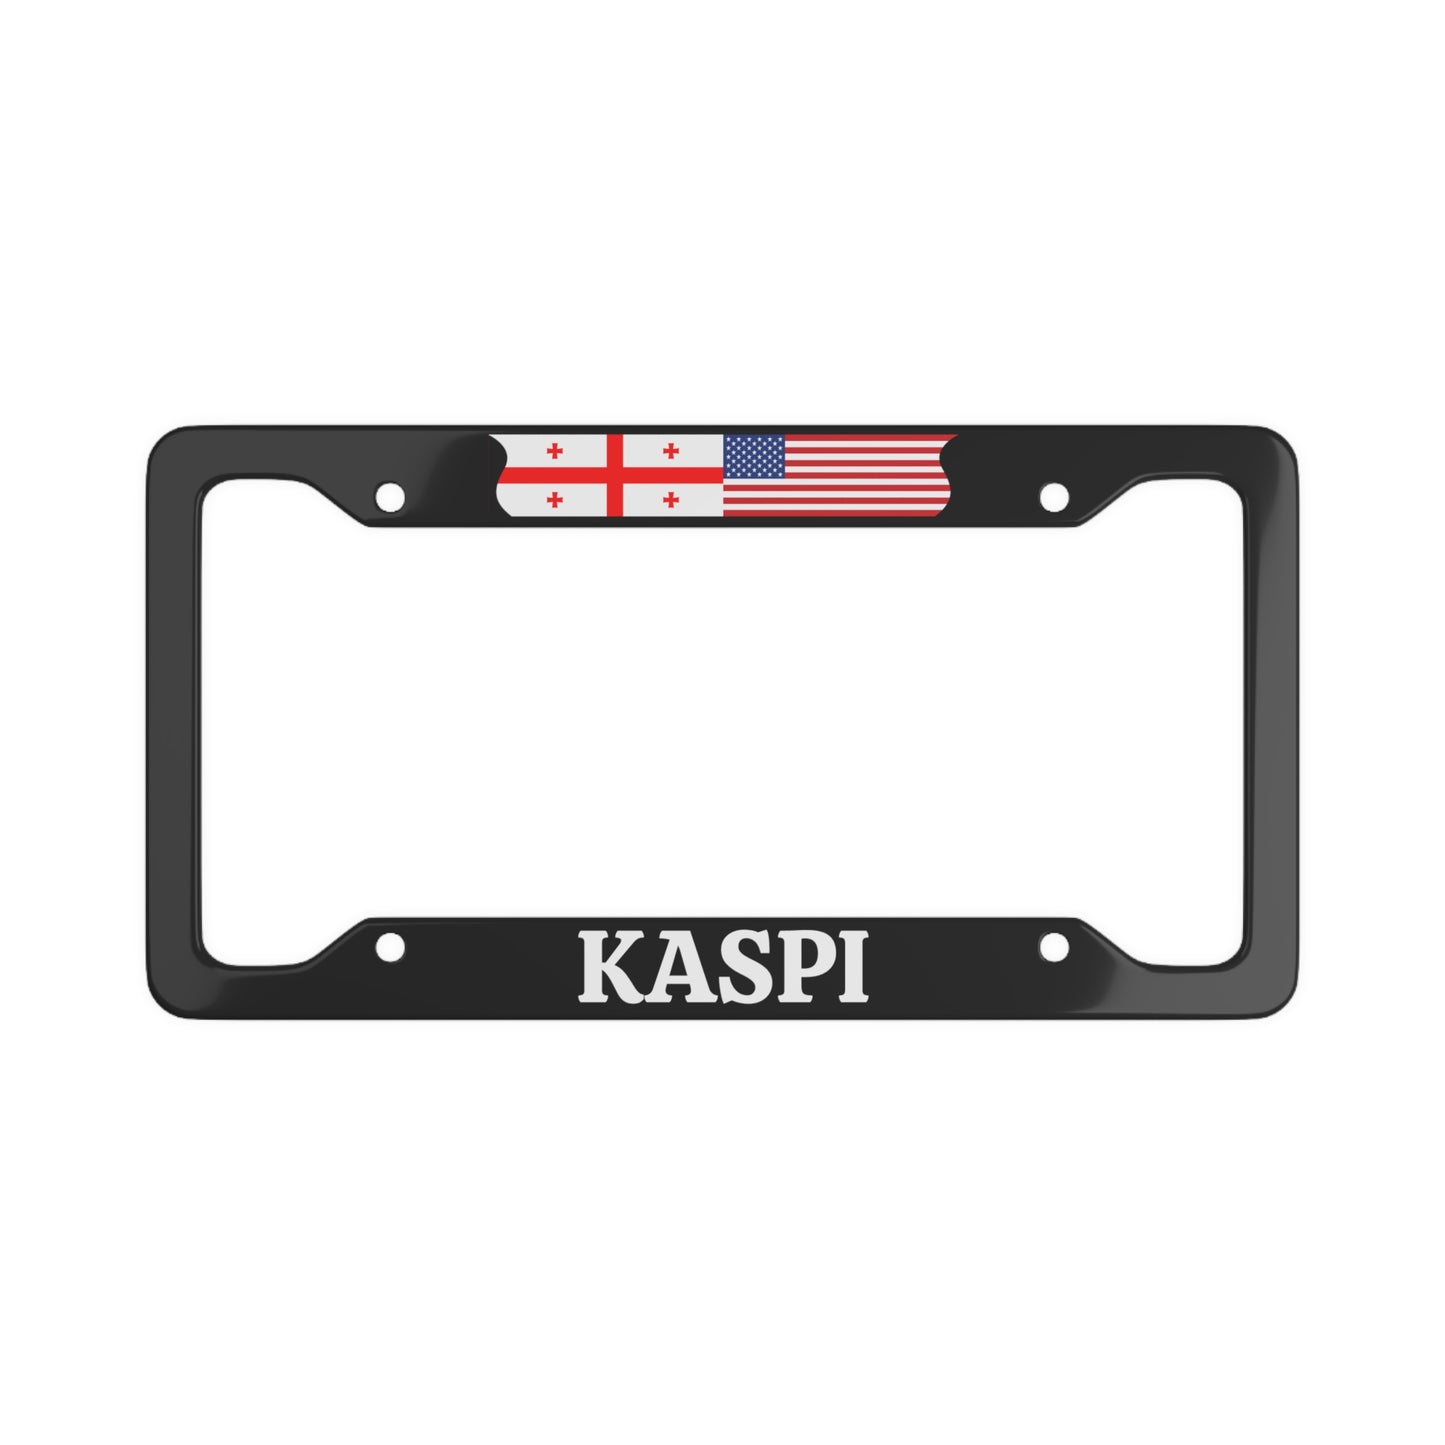 KASPI Georgia with flag License Plate Frame